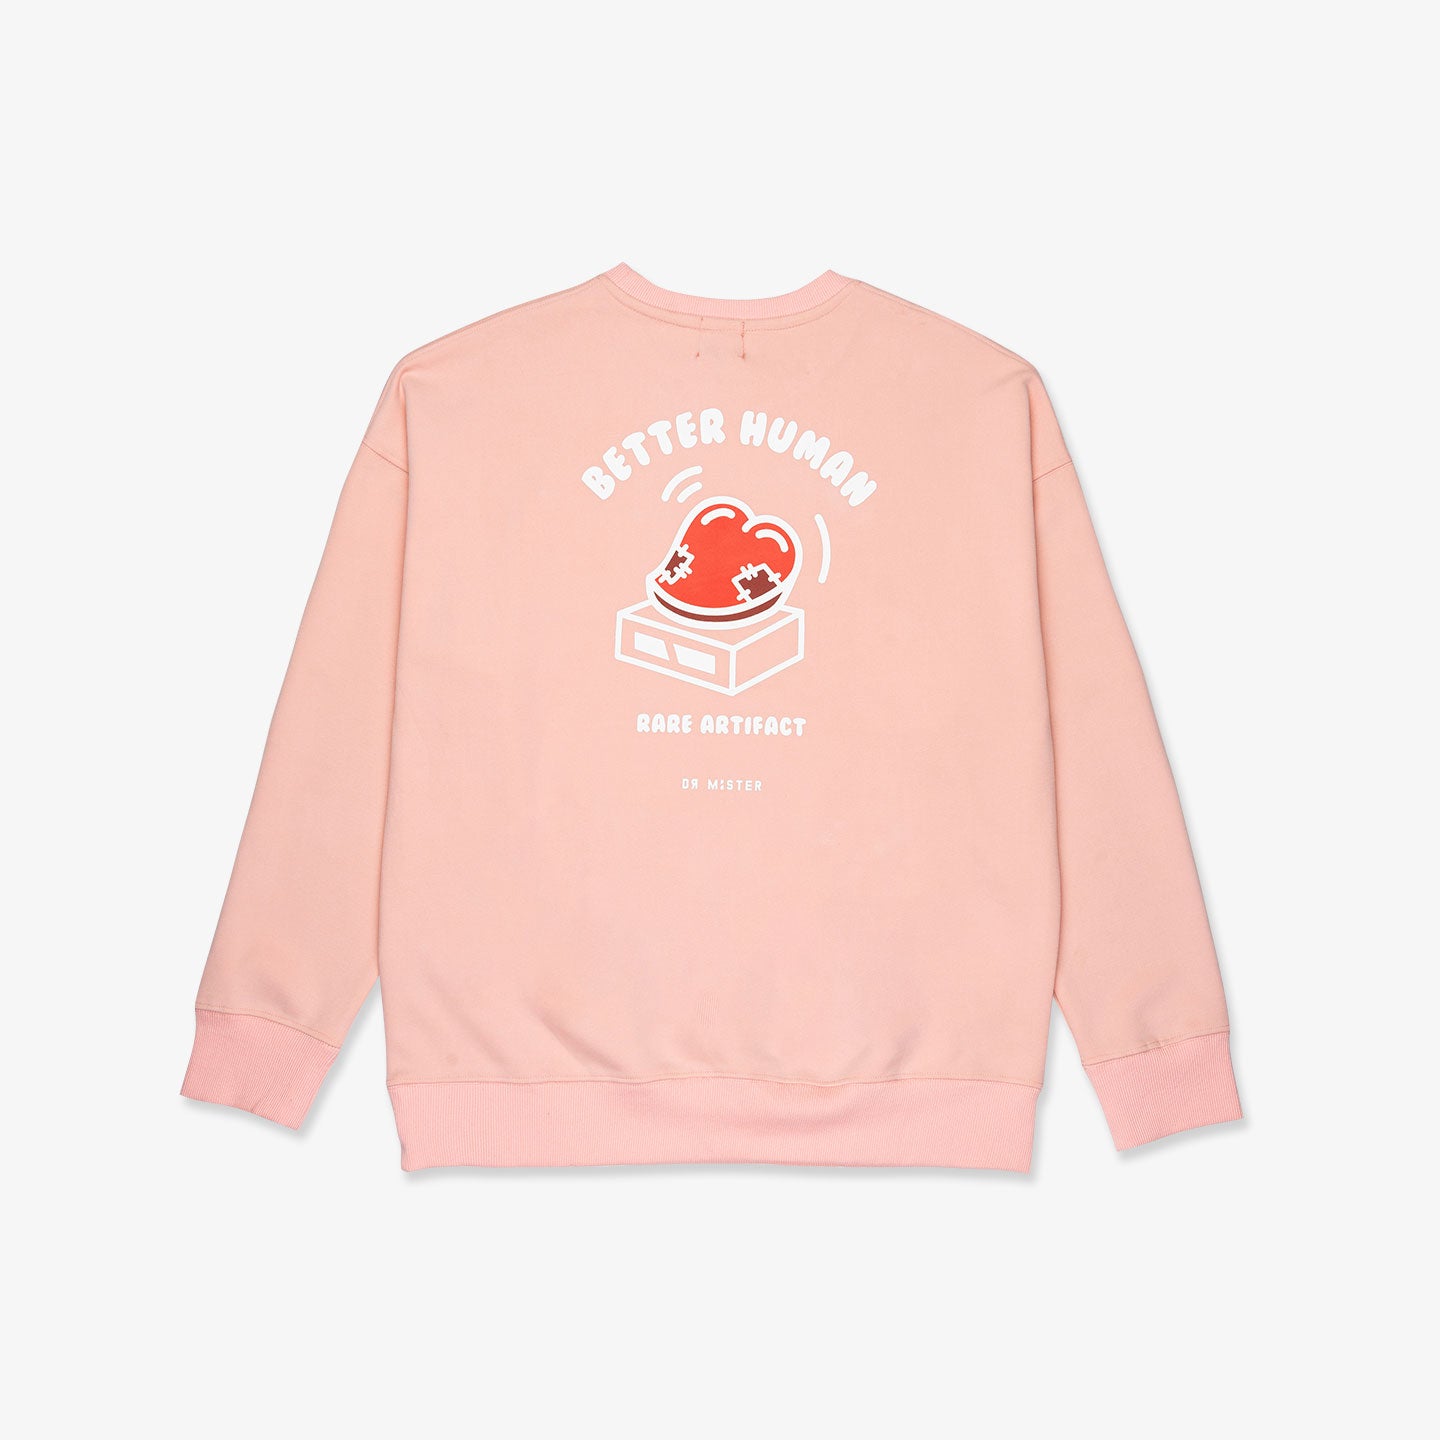 Rare Artifact Sweatshirt - Beige Pink